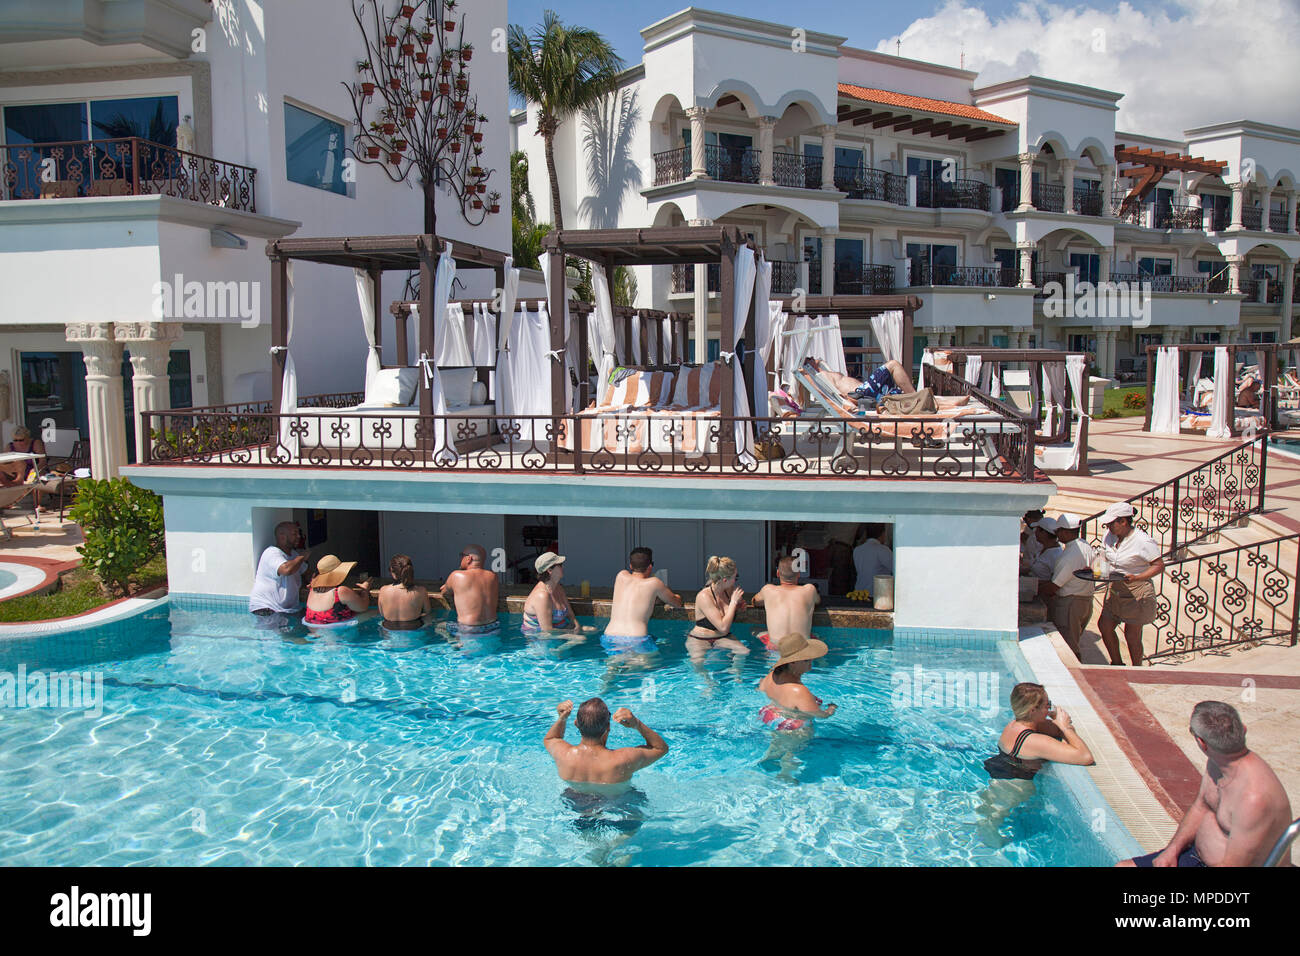 resort-guests-at-the-swimming-pool-bar-the-royal-playa-del-carmen-adults-only-resort-hotel-quintana-roo-mexico-MPDDYT